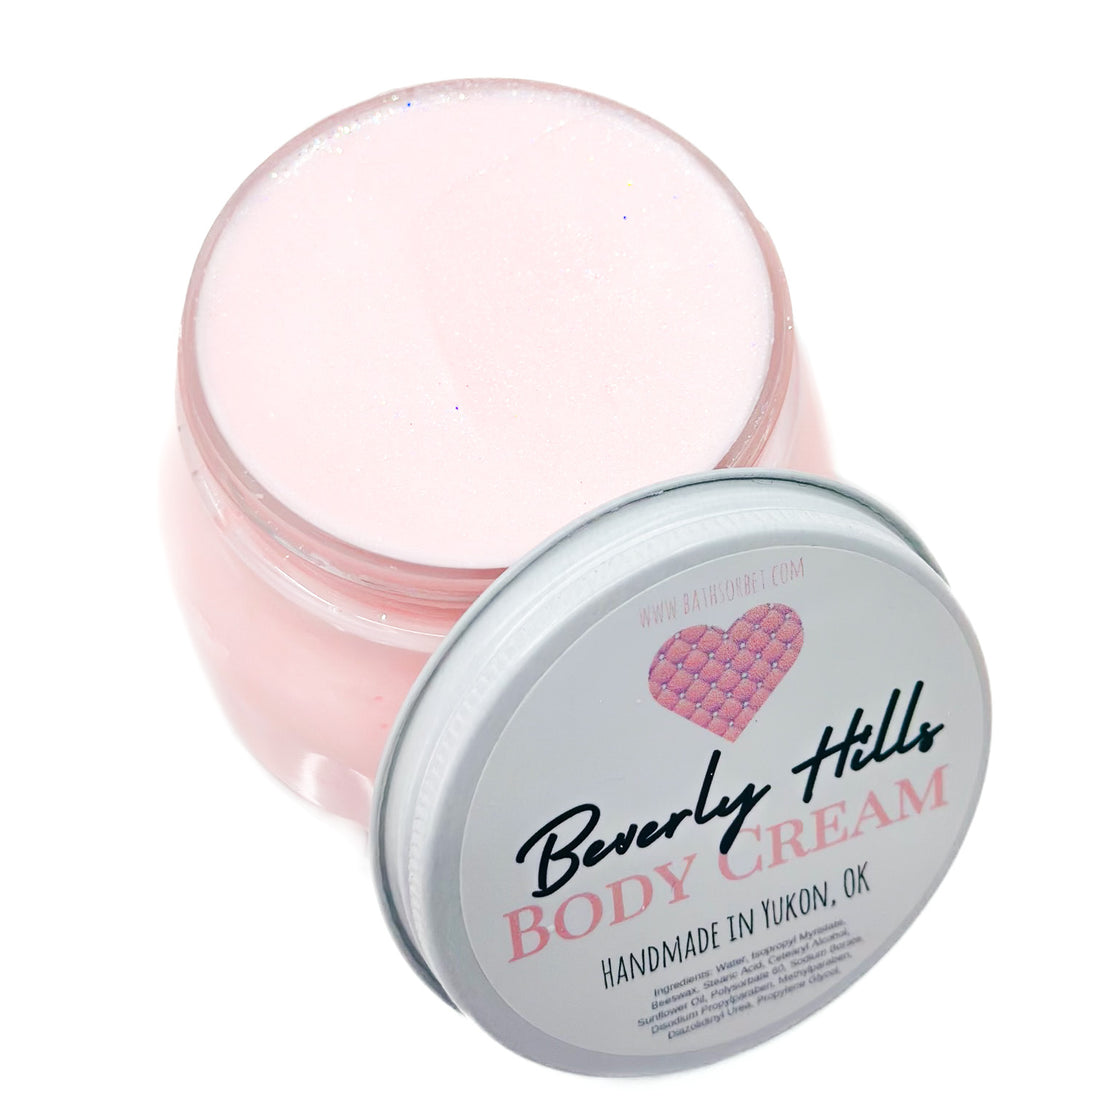 Beverly Hills Body Cream